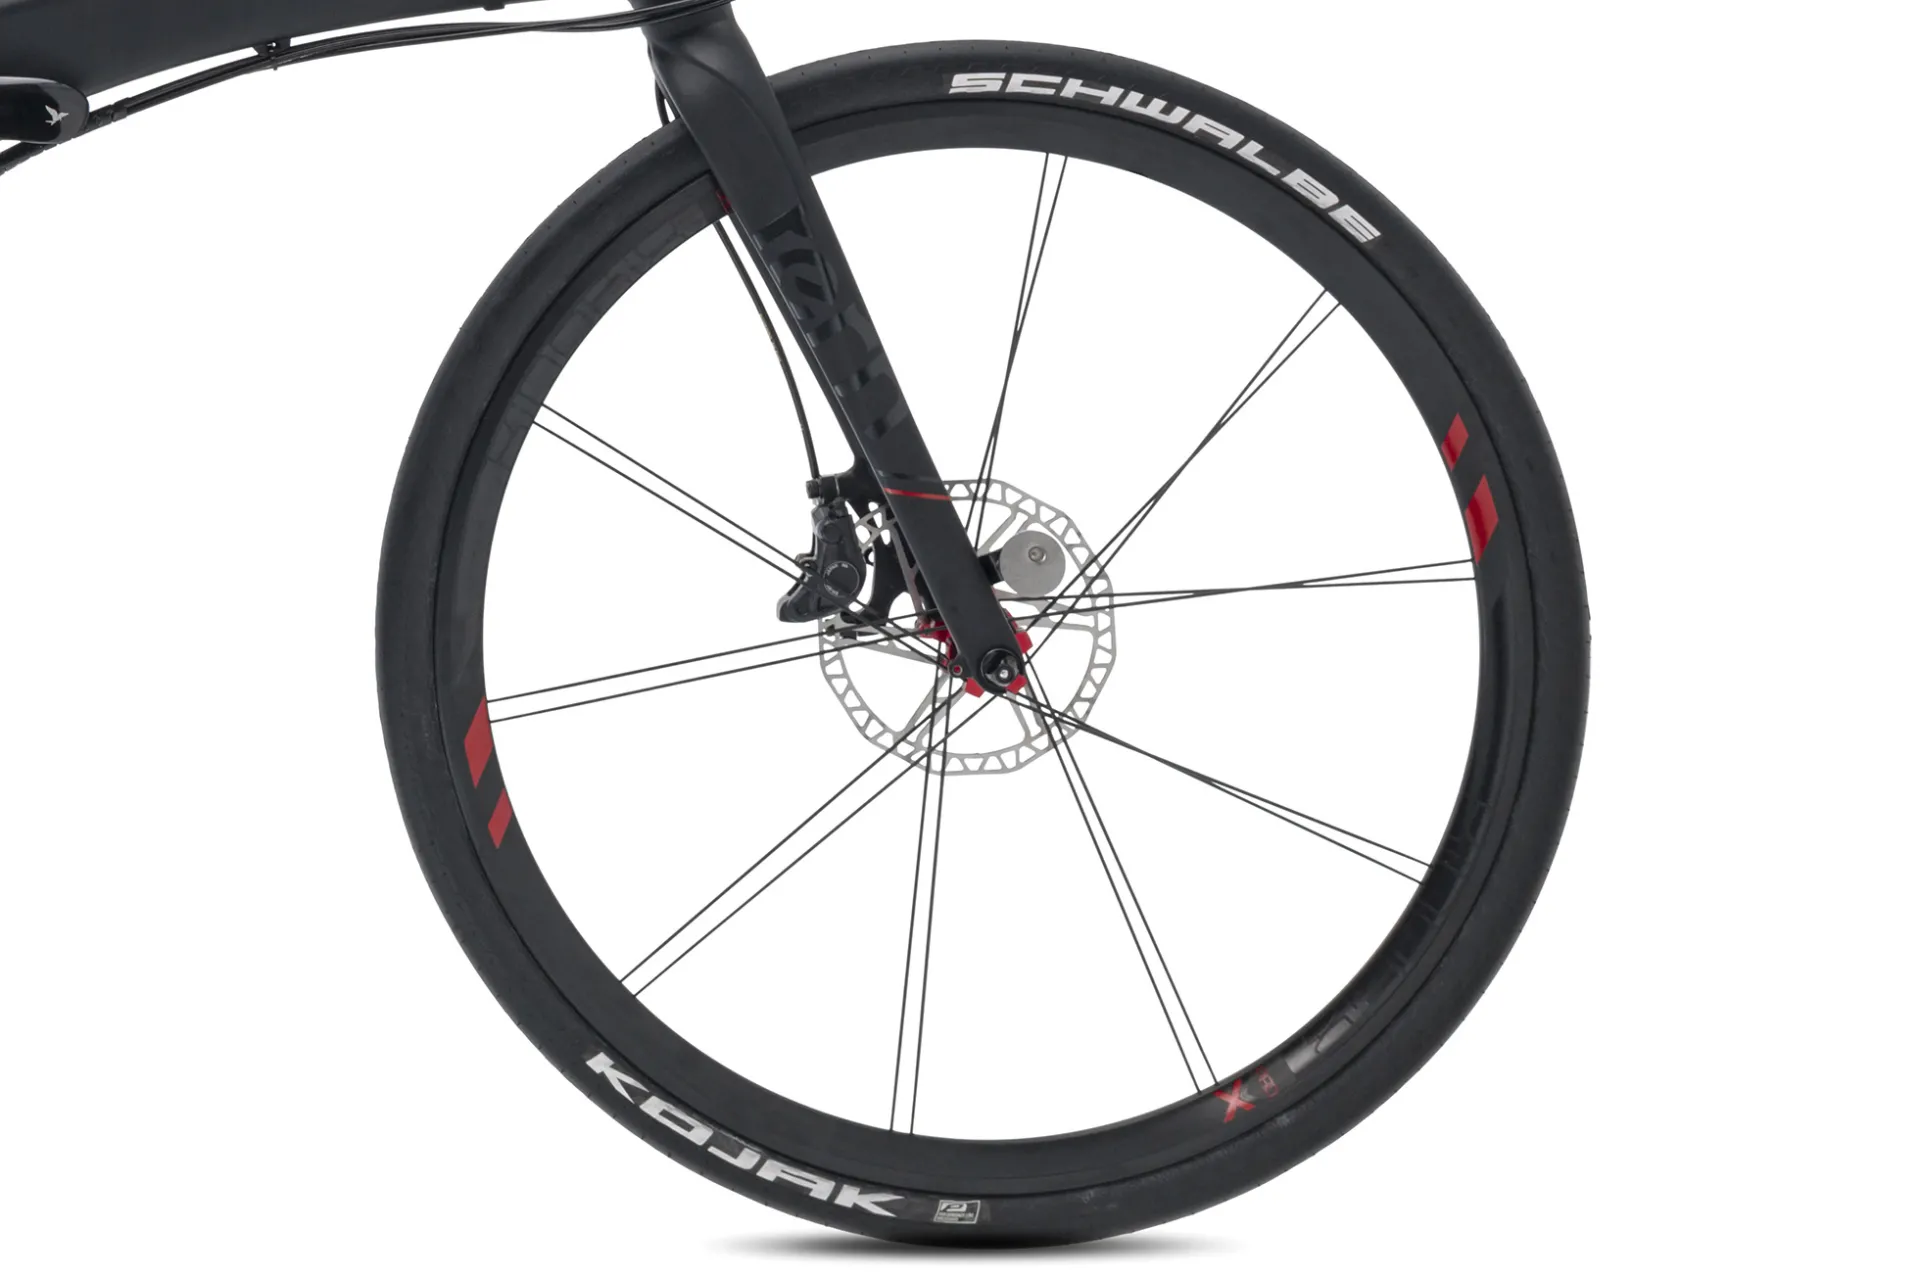 Kinetix Pro X Disc Wheels - High Performance wheelsets for folding bikes